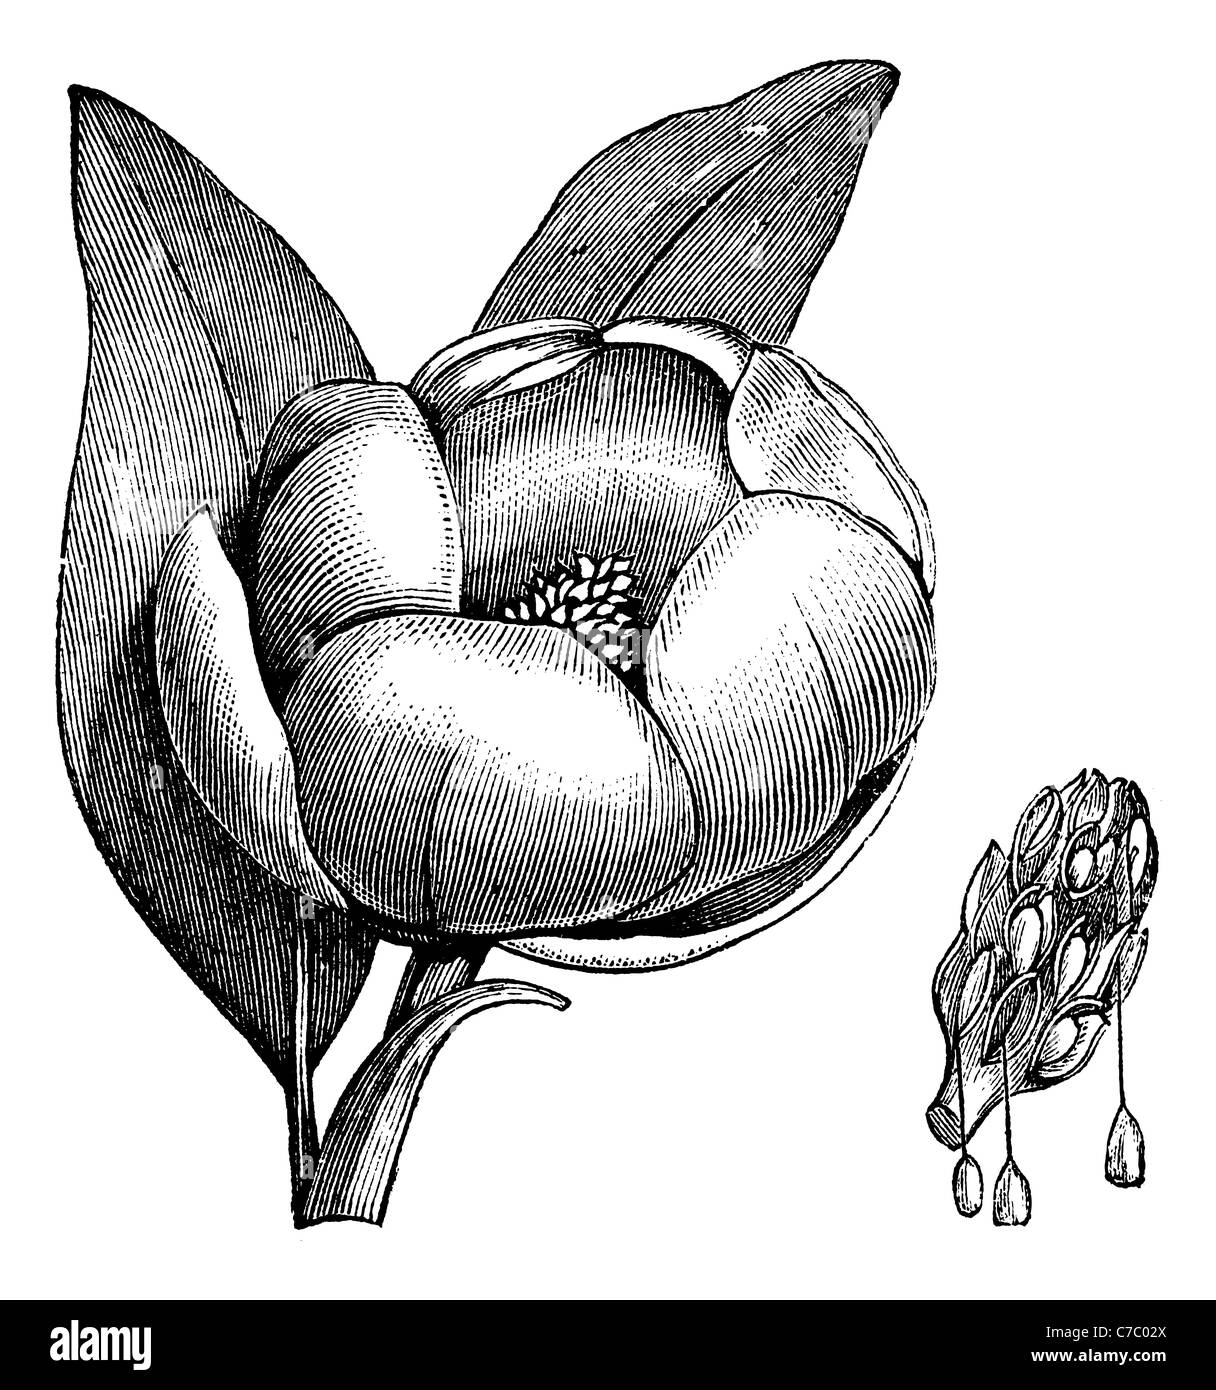 Sweetbay magnolia, vintage incisione. Vecchie illustrazioni incise di Sweetbay magnolia isolato su uno sfondo bianco. Foto Stock